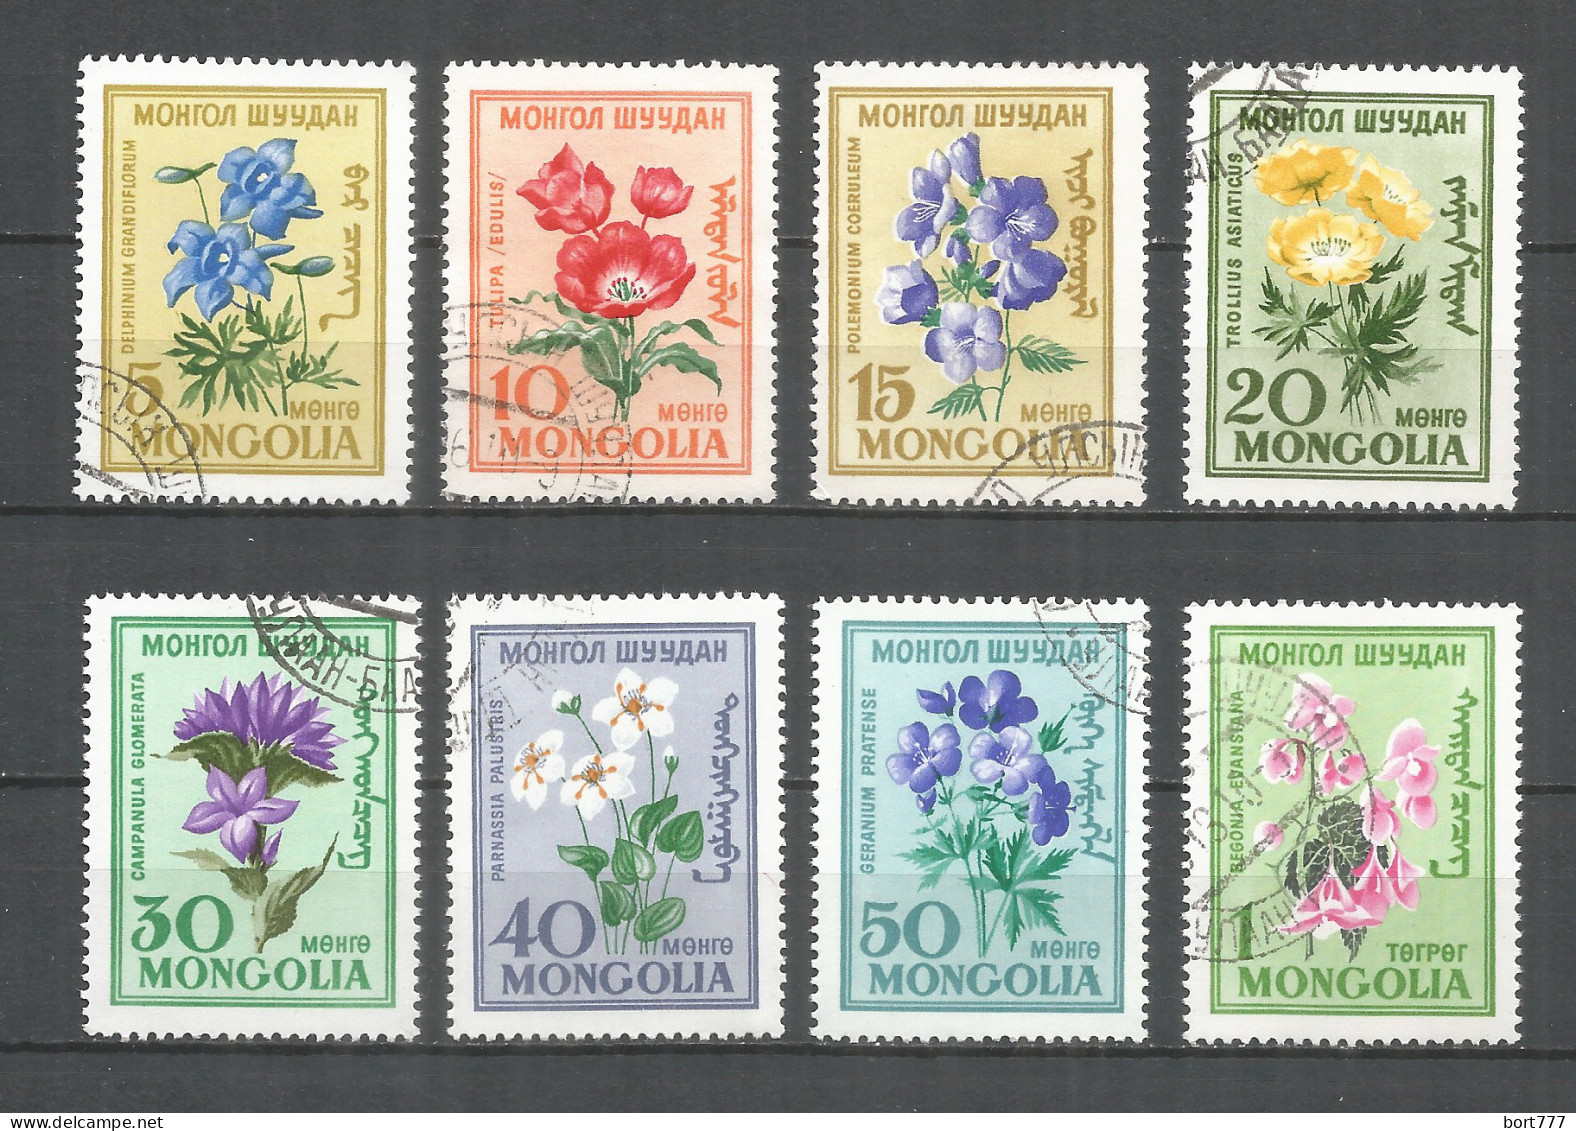 Mongolia 1960 Used Stamps CTO , Flowers - Mongolia